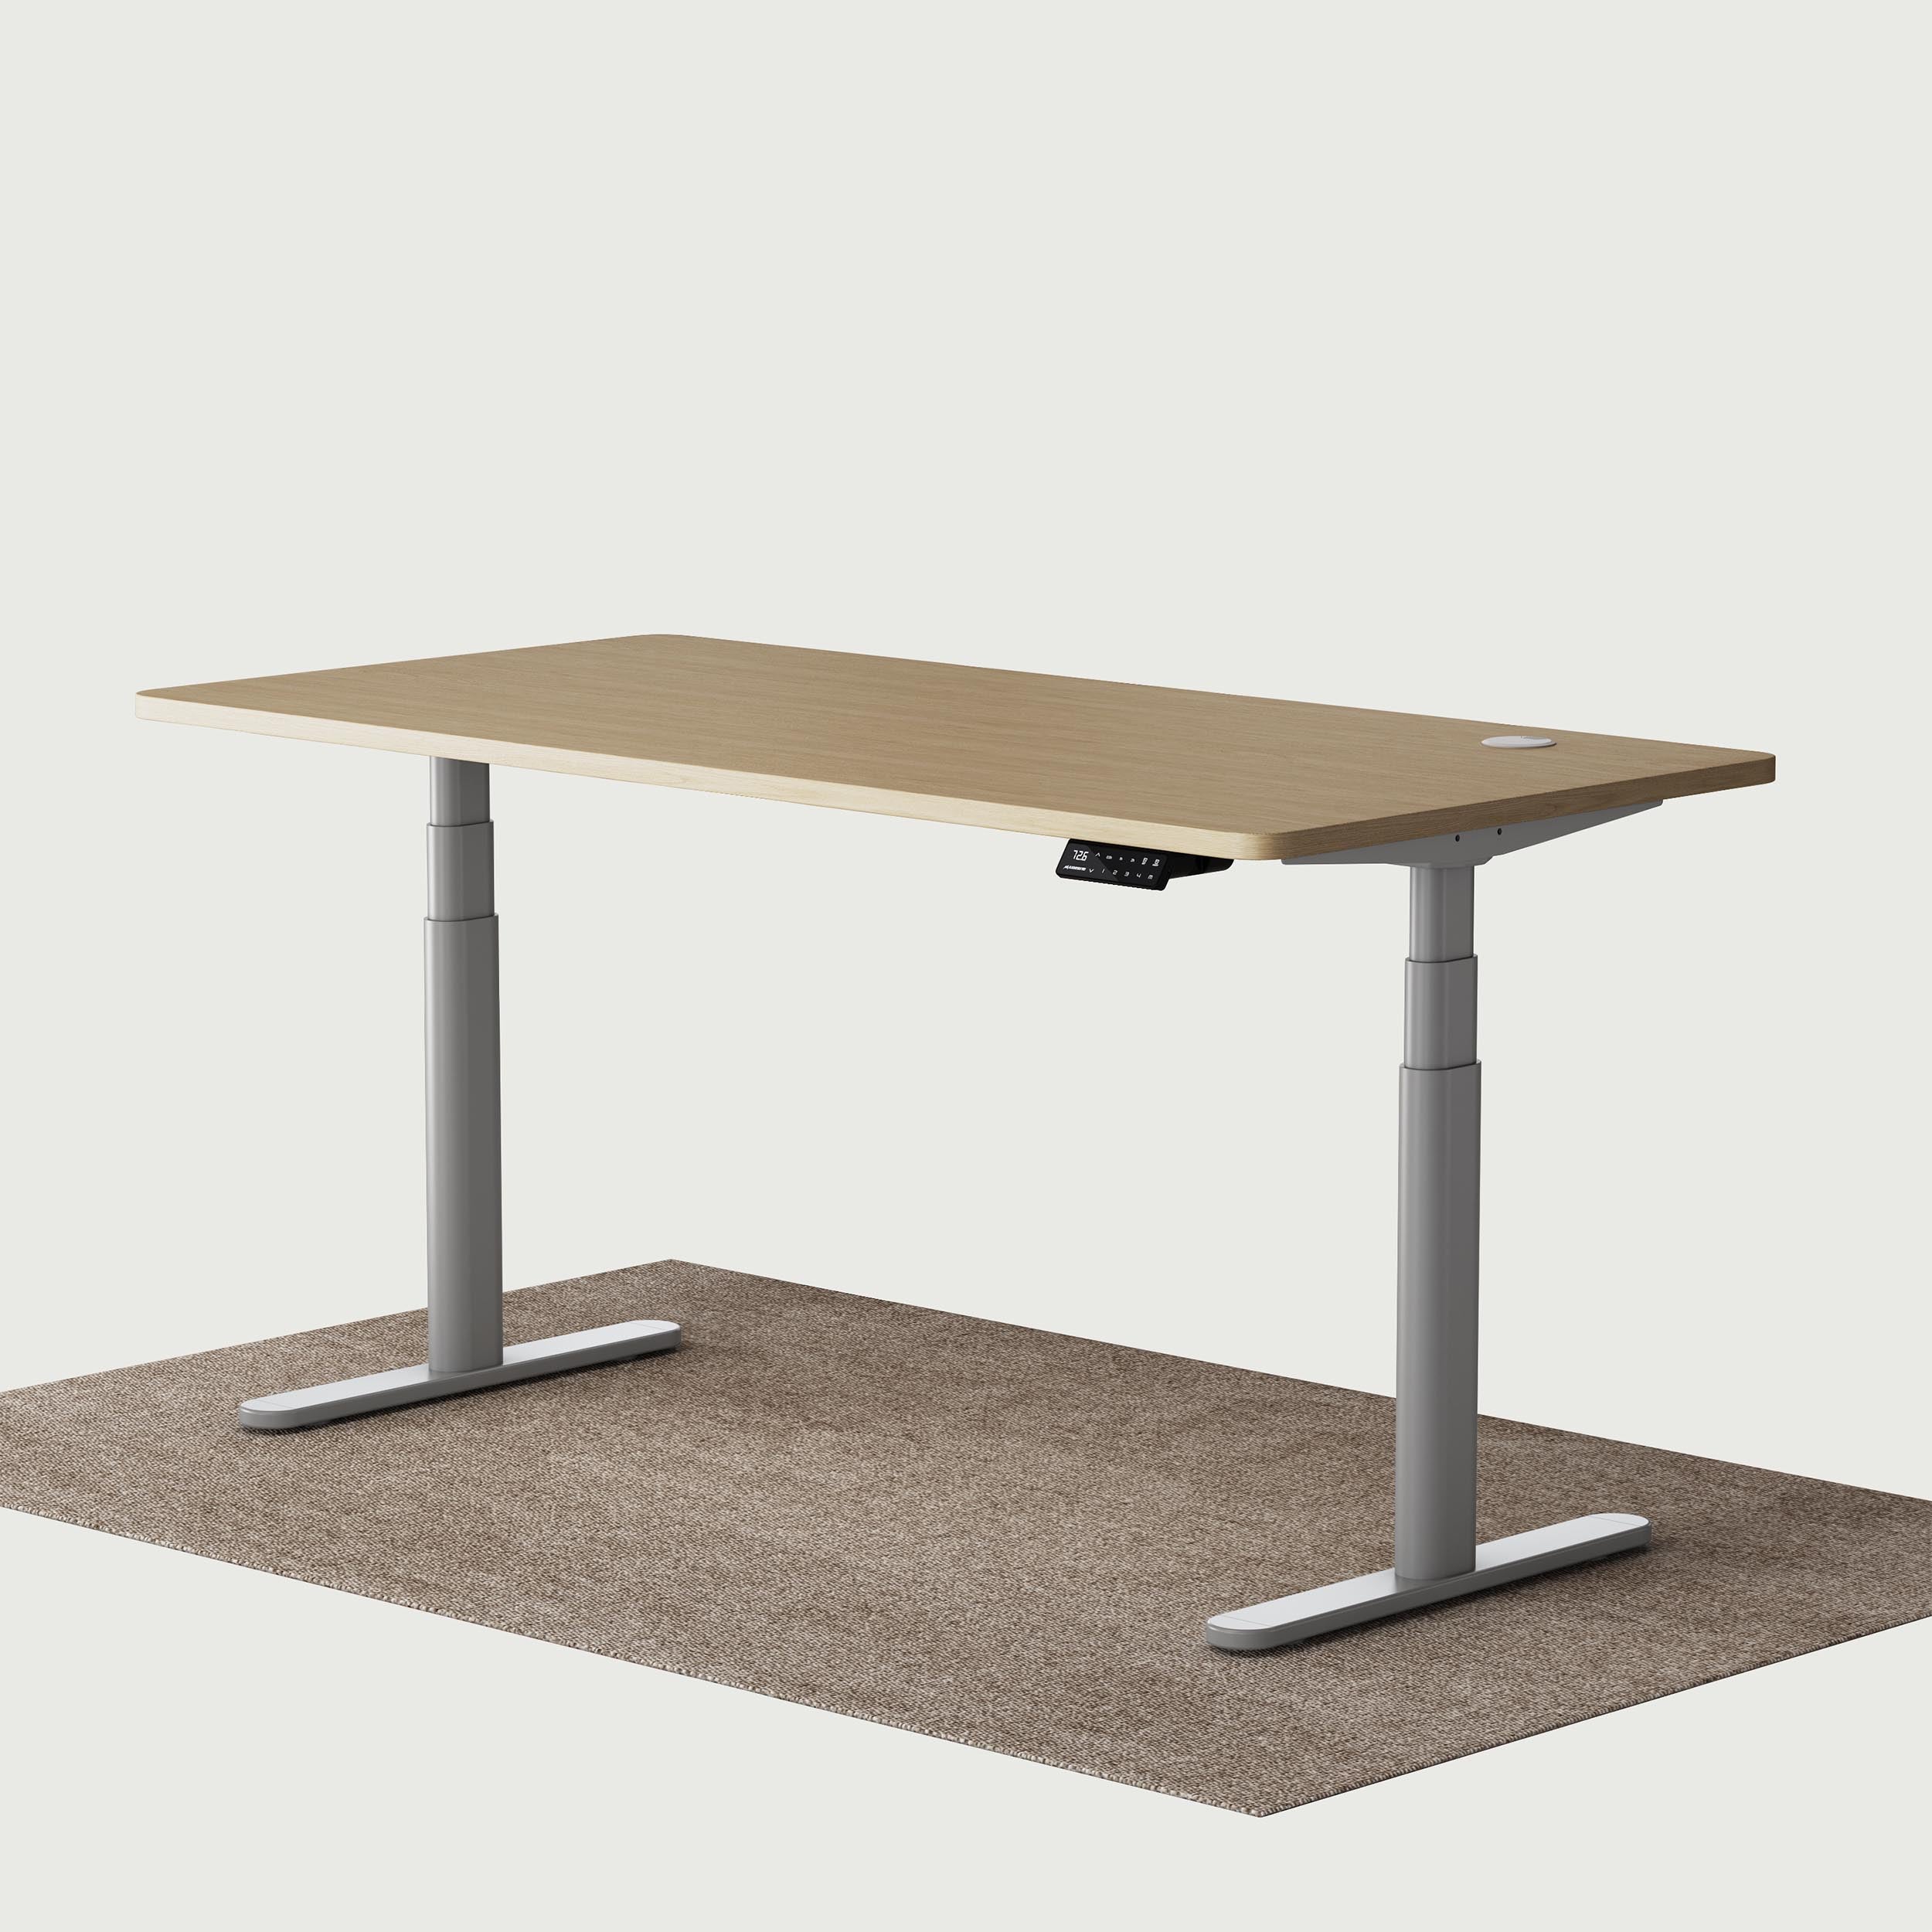 TH2 Pro Plus grey oval electric standing desk frame with oak 160x80 cm desktop